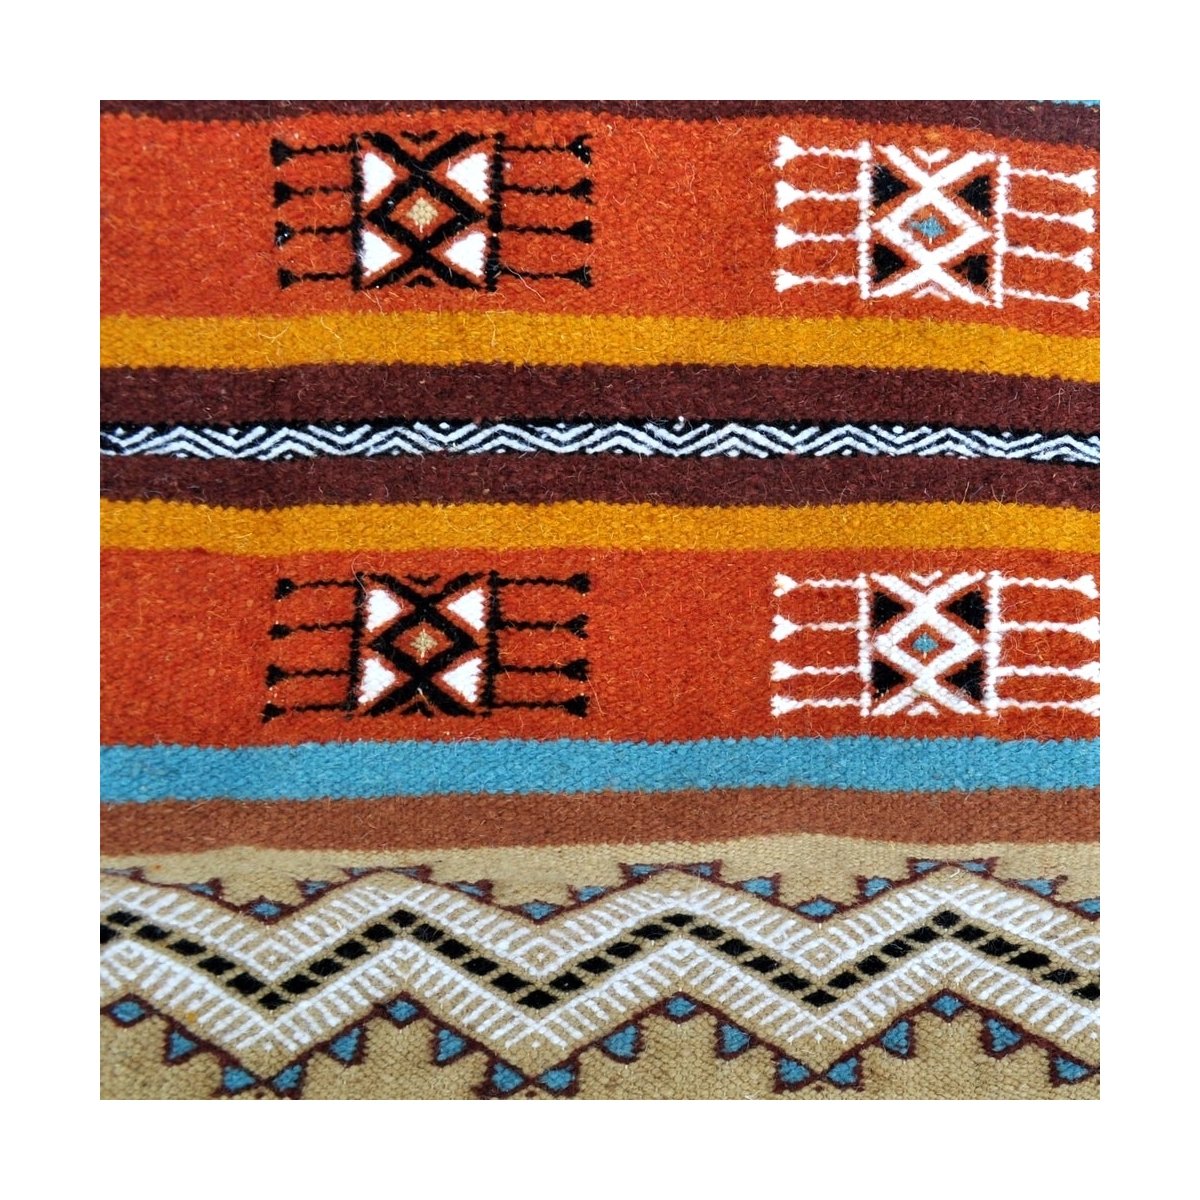 Berber tapijt Tapijt Kilim Othman 110x180 Jeel/Veelkleurig (Handgeweven, Wol, Tunesië) Tunesisch kilimdeken, Marokkaanse stijl. 